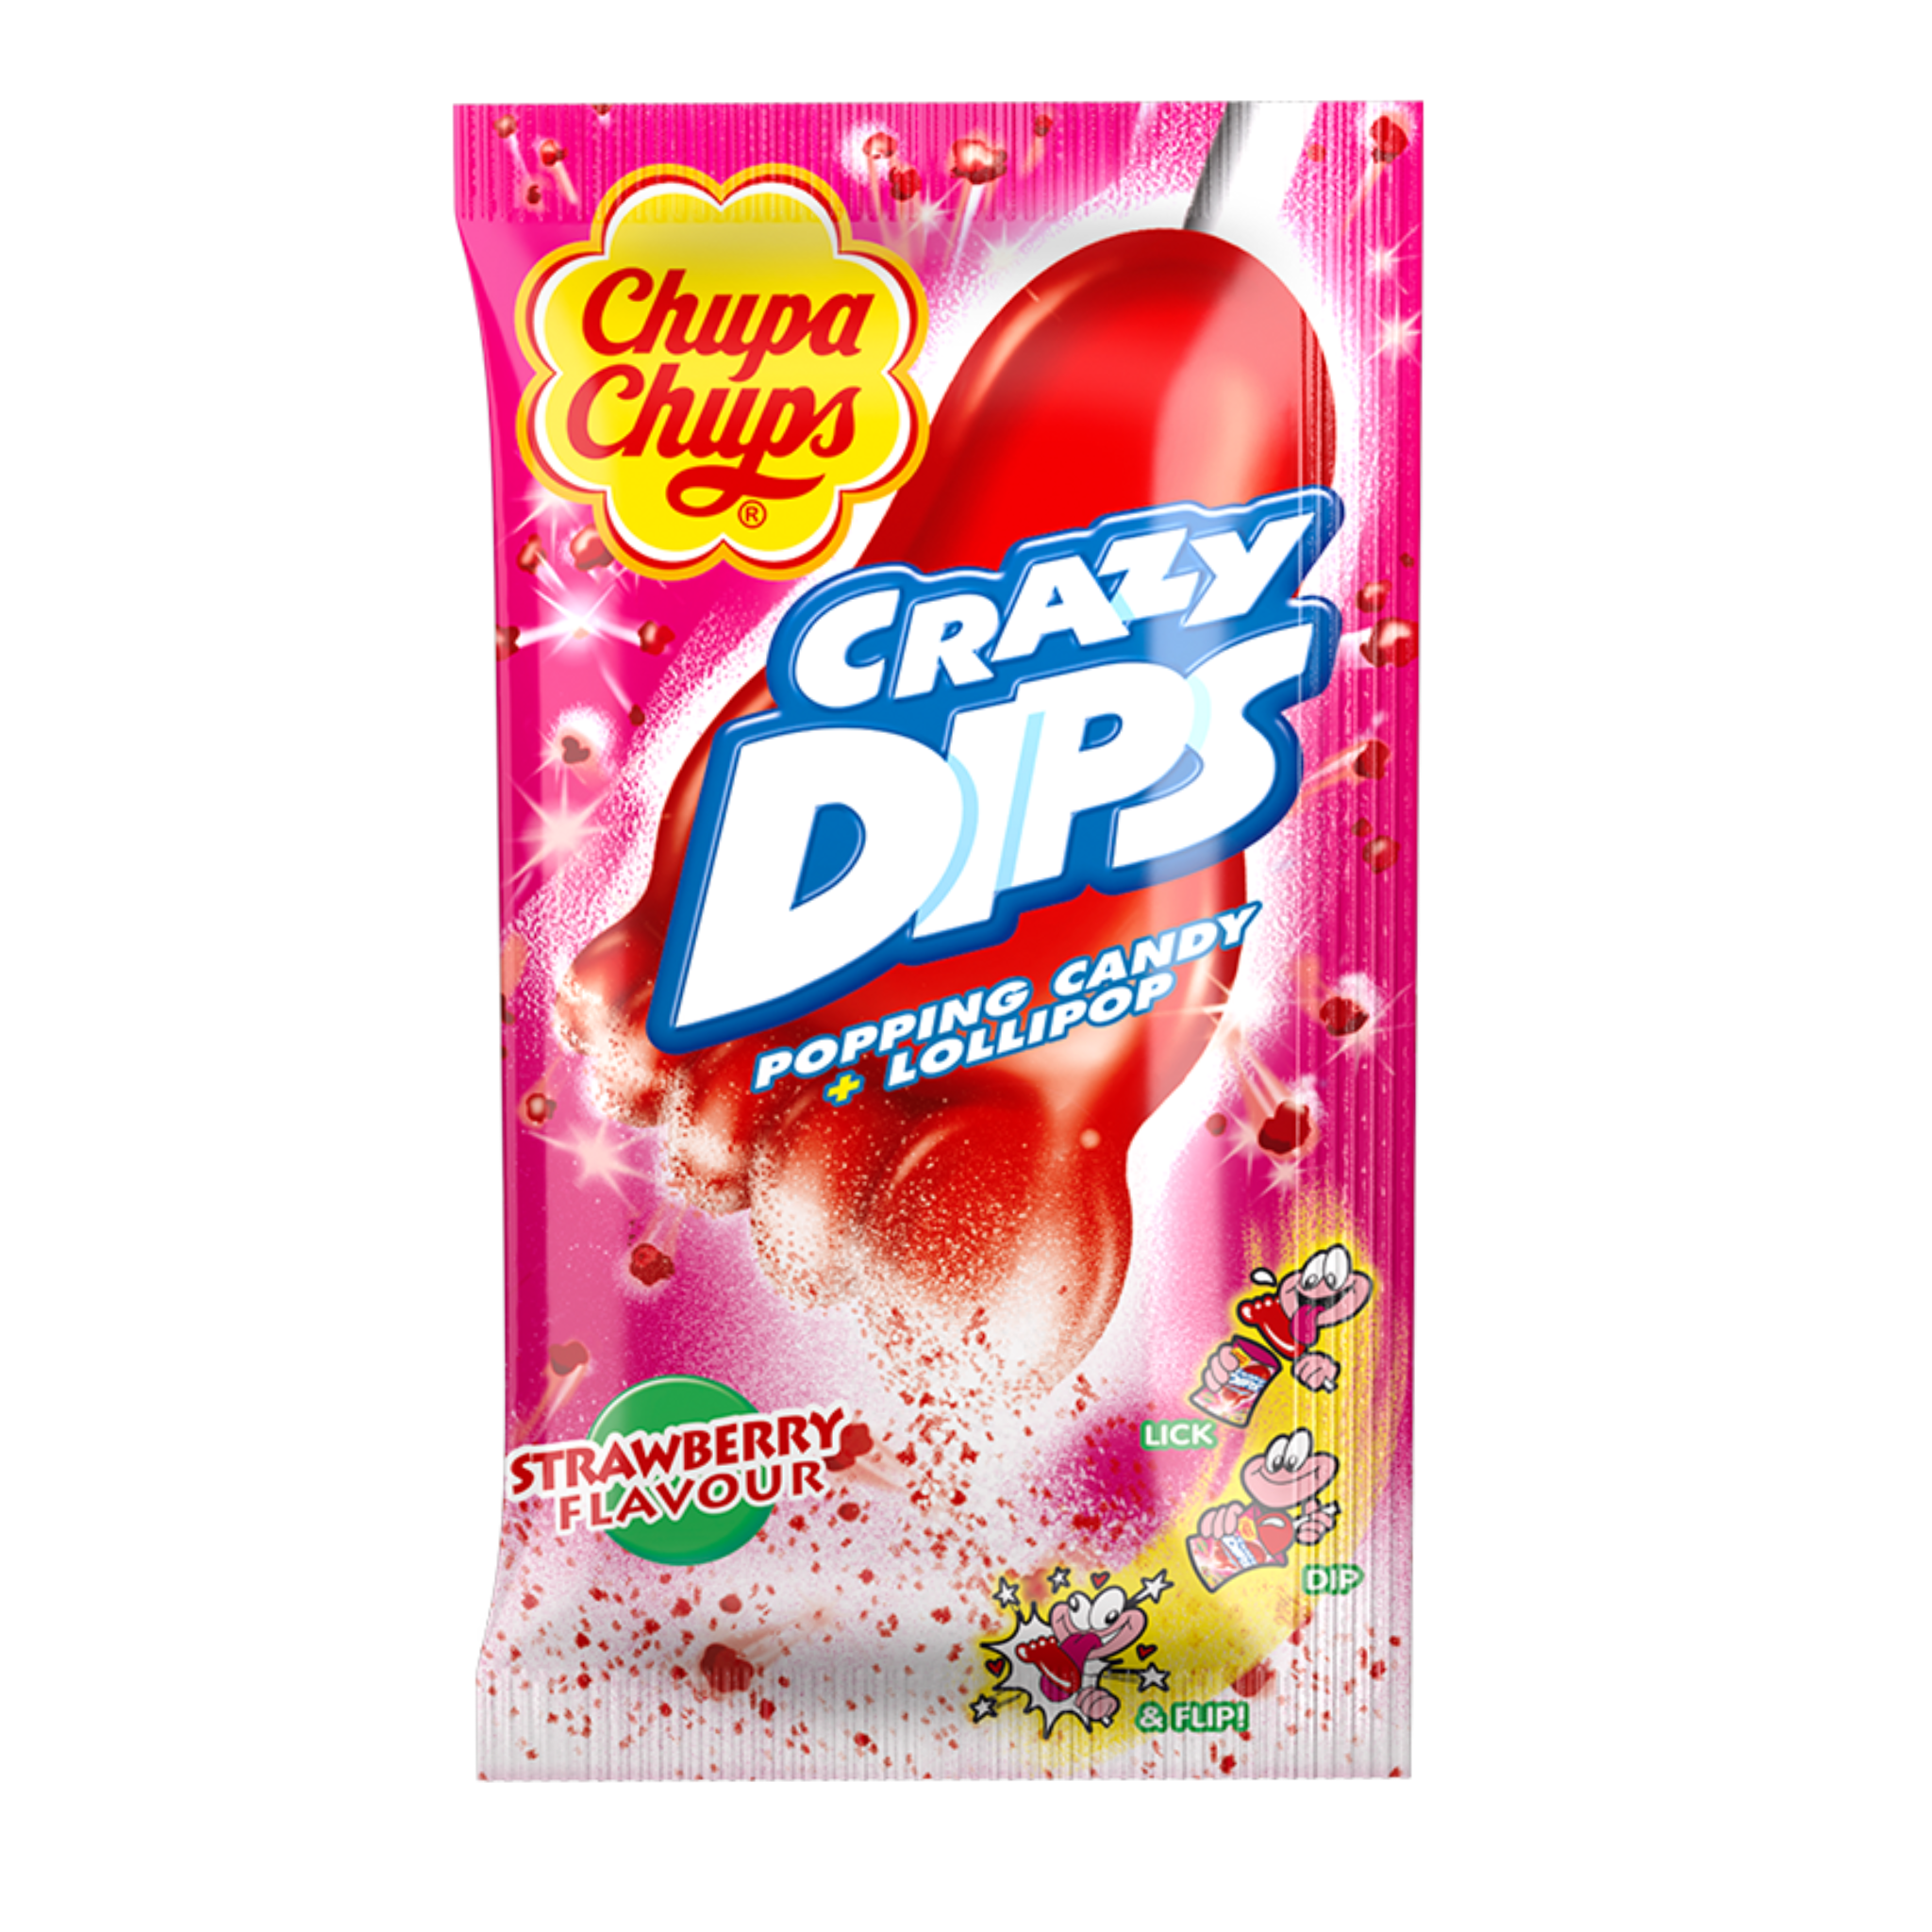 Chupa Chups - Crazy dips